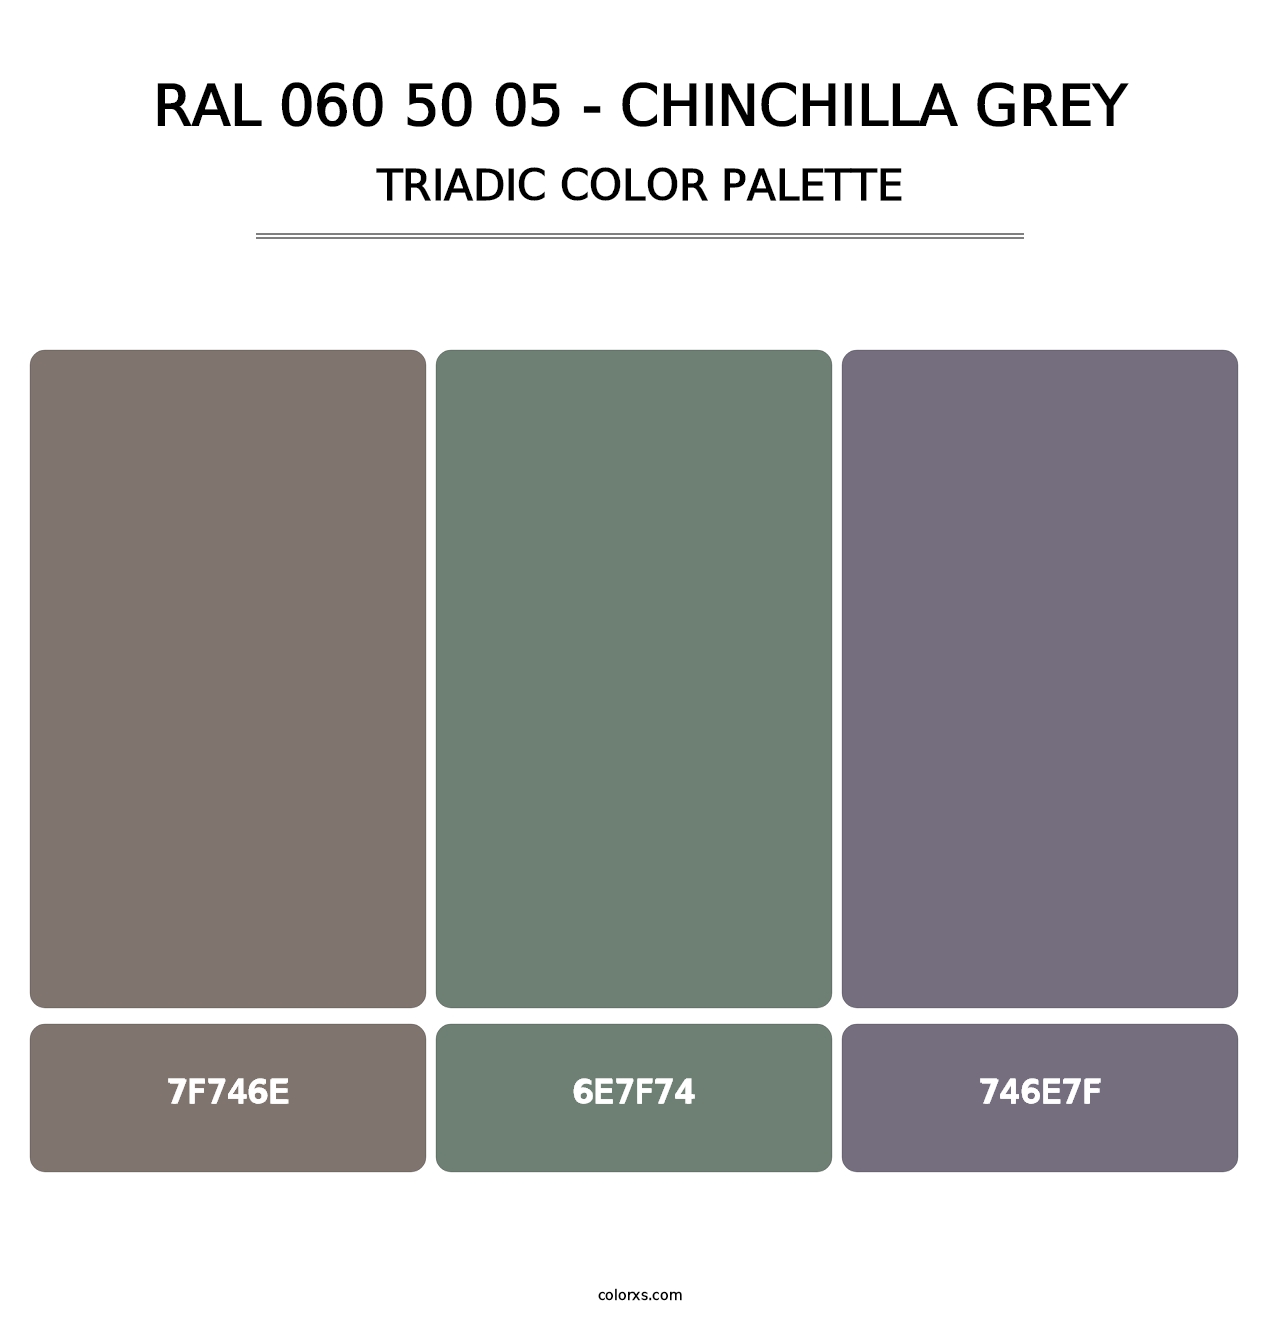 RAL 060 50 05 - Chinchilla Grey - Triadic Color Palette